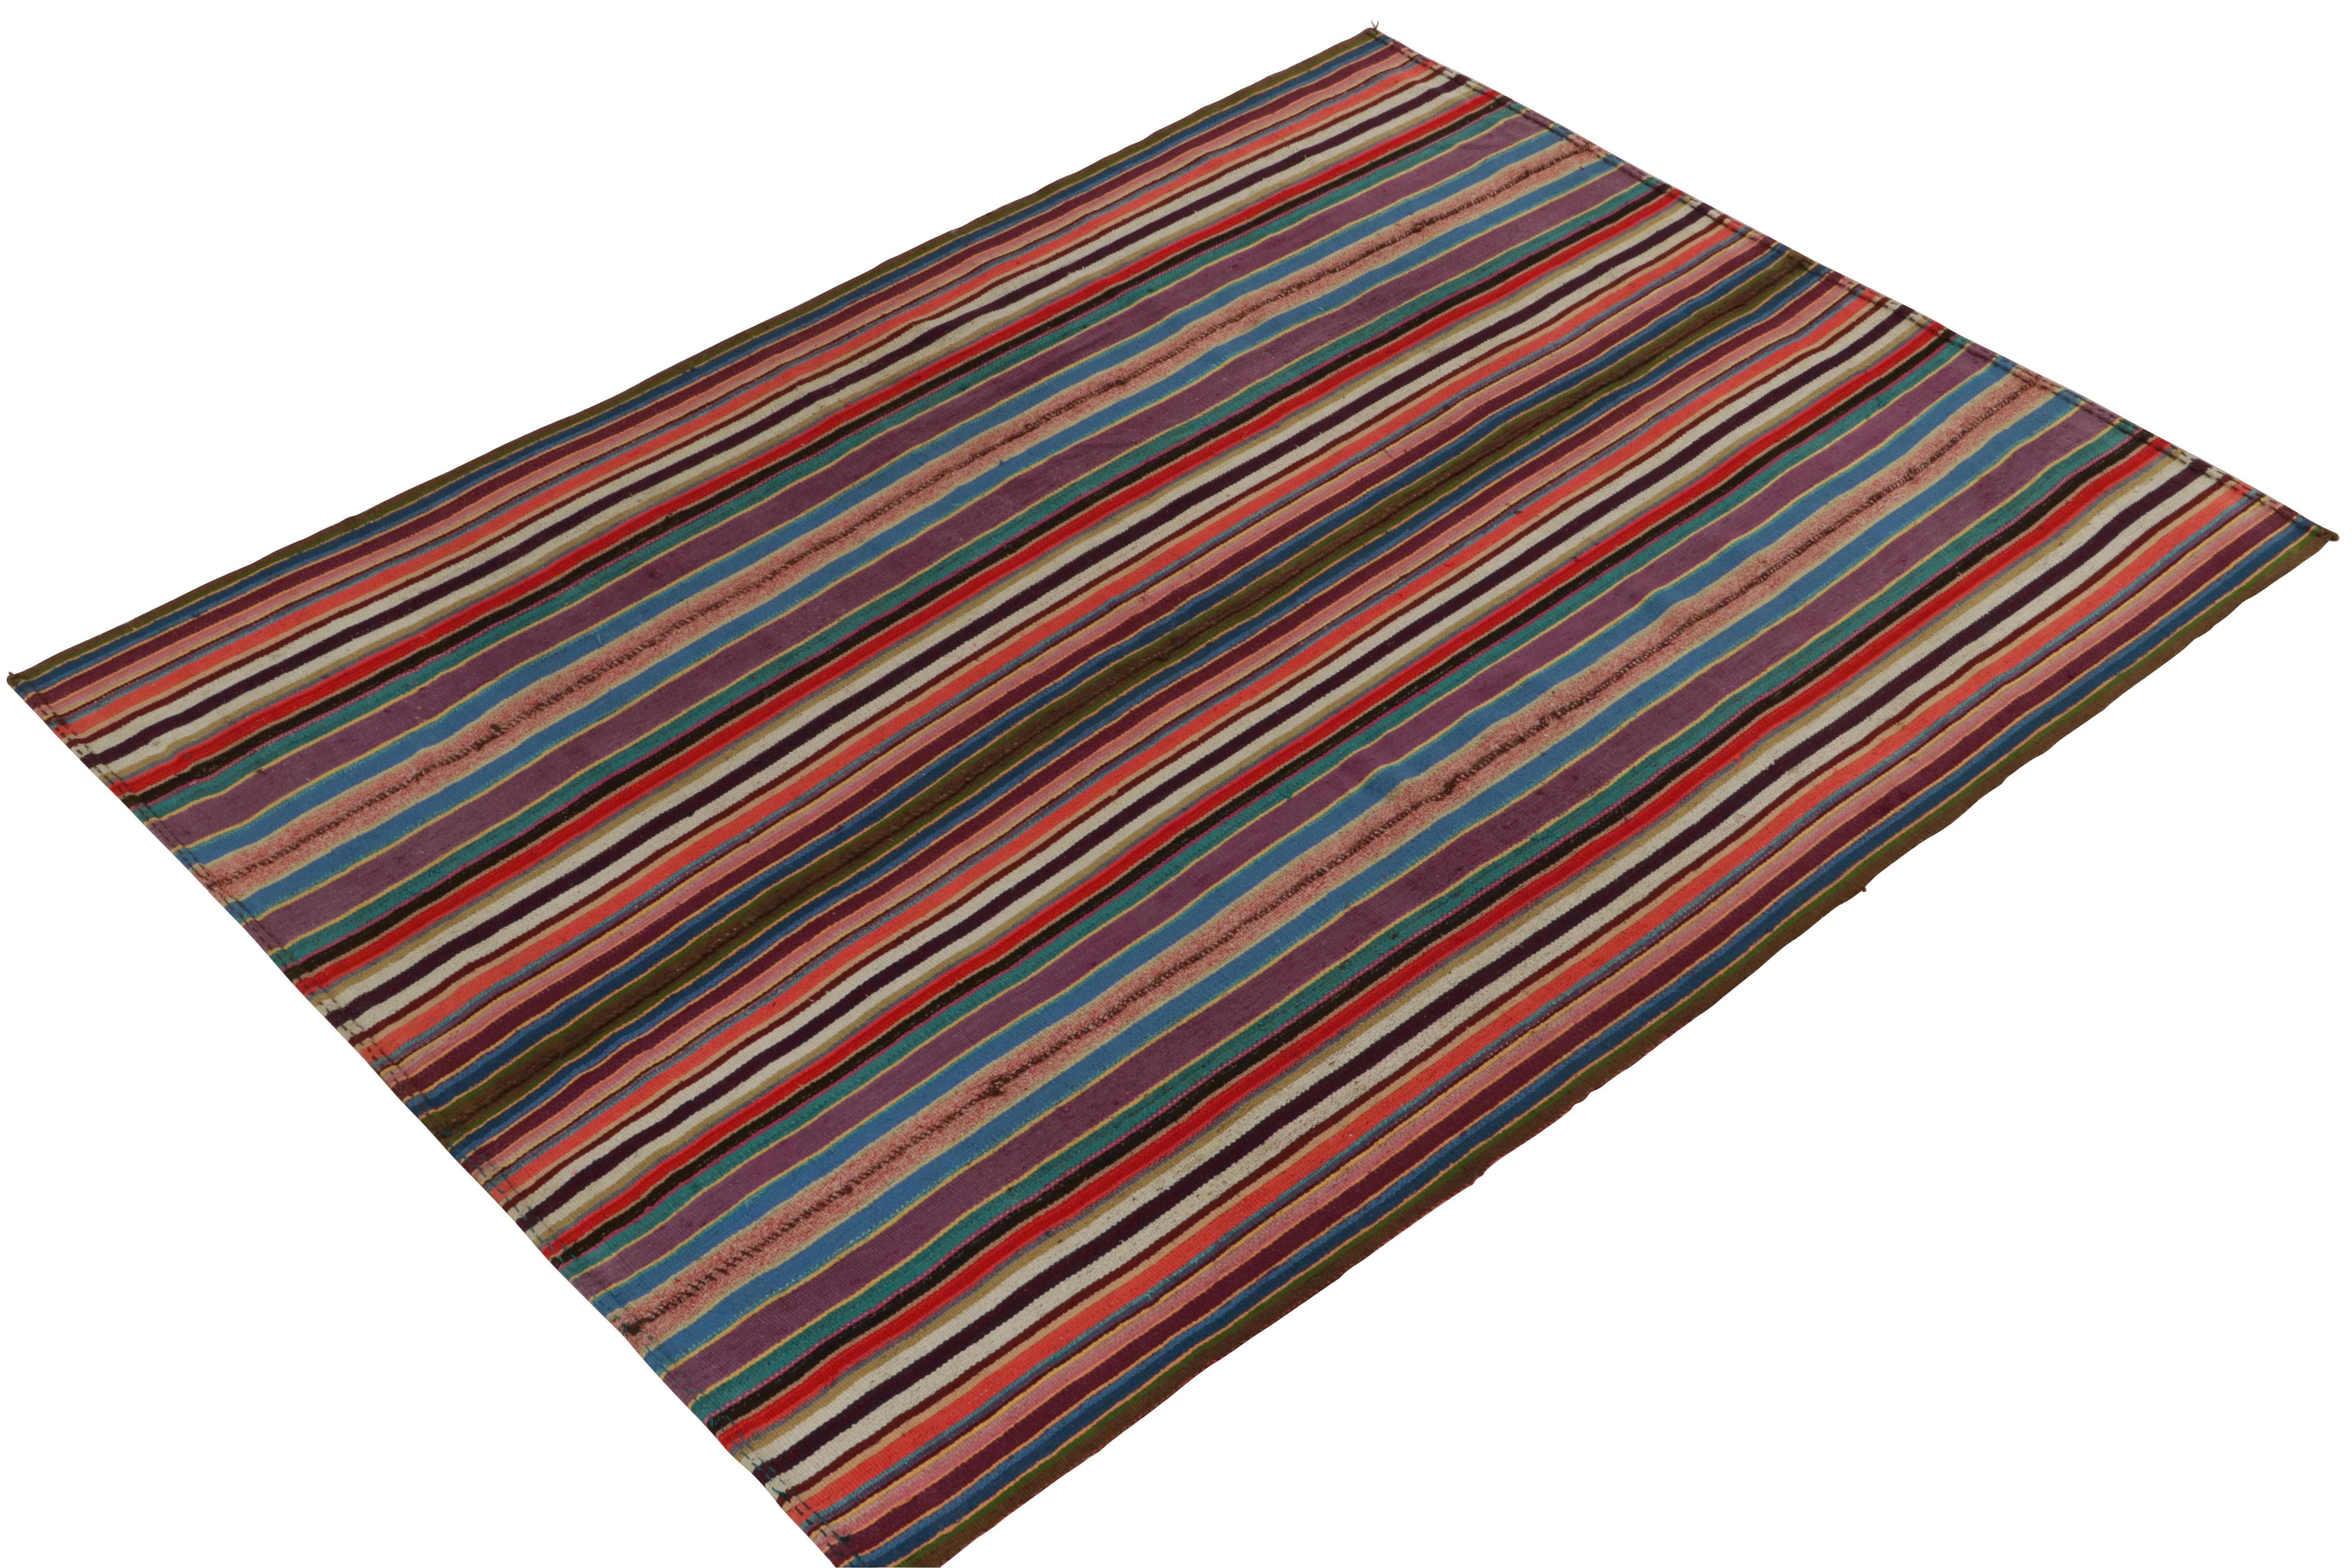 Mid-Century Modern 1950s Vintage Chaput Kilim Rug in Multicolor Stripes, Patterns by Rug & Kilim For Sale